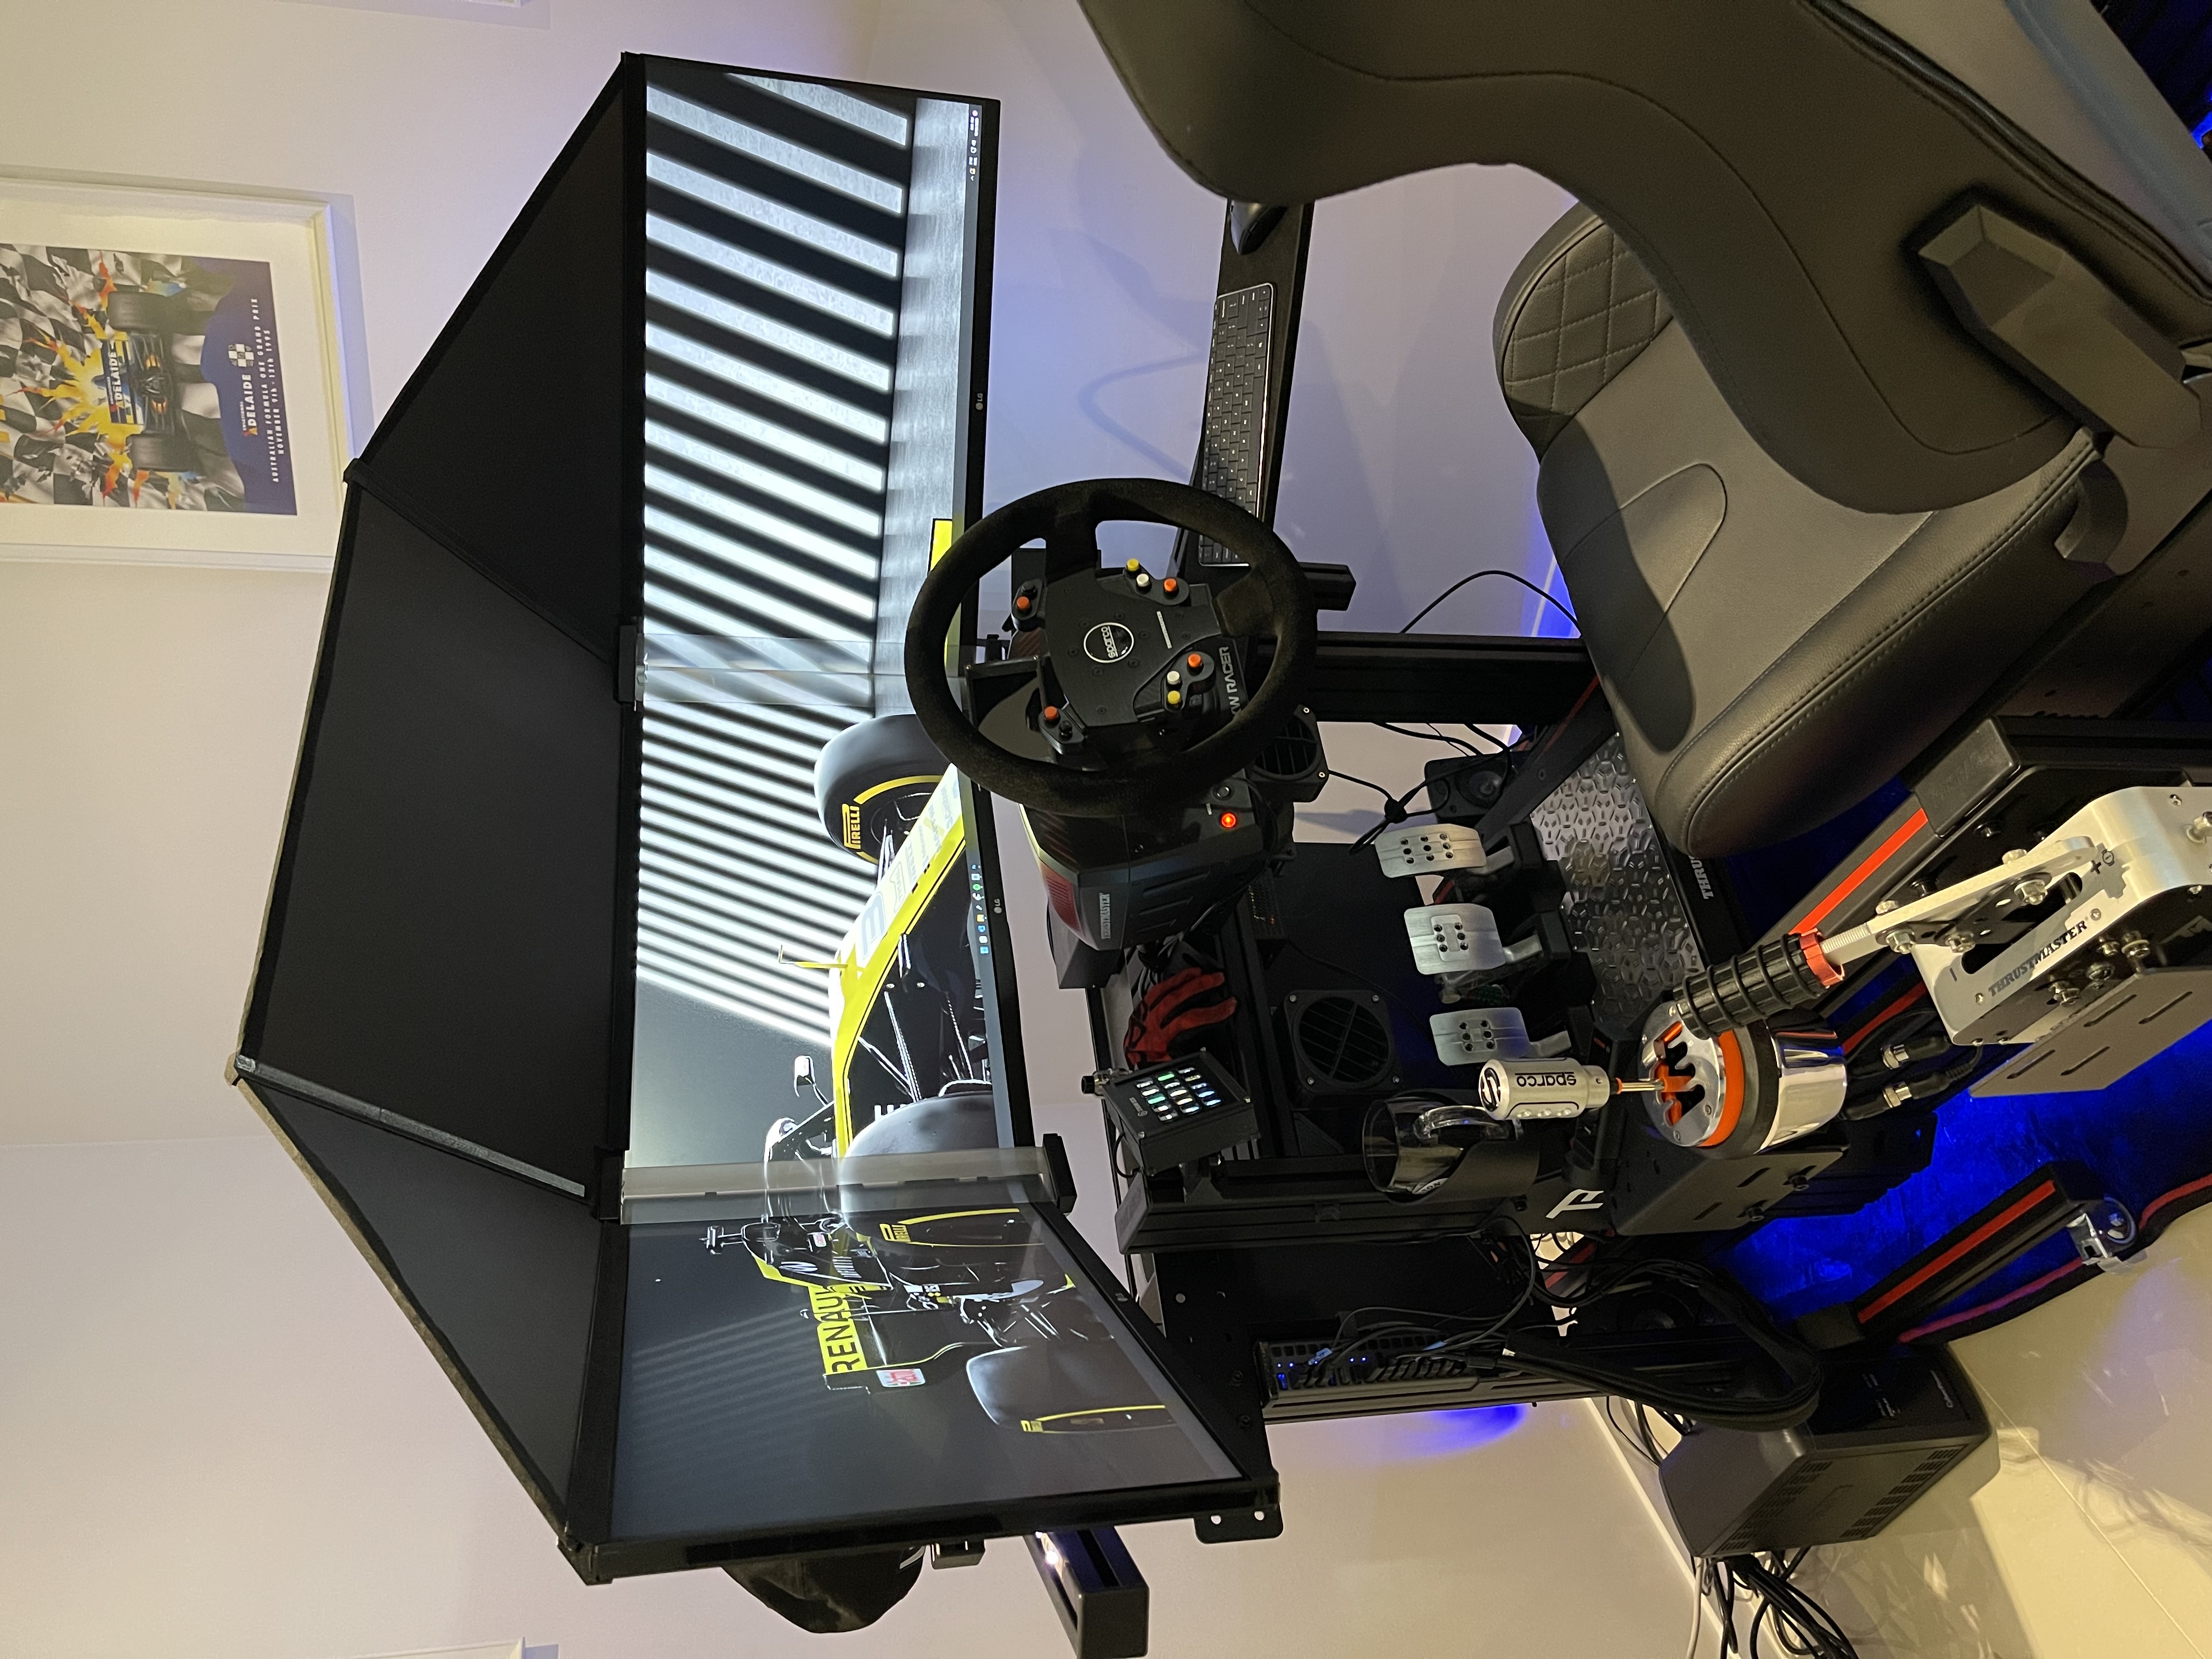 Sim Racing Canopy for Triple Monitors